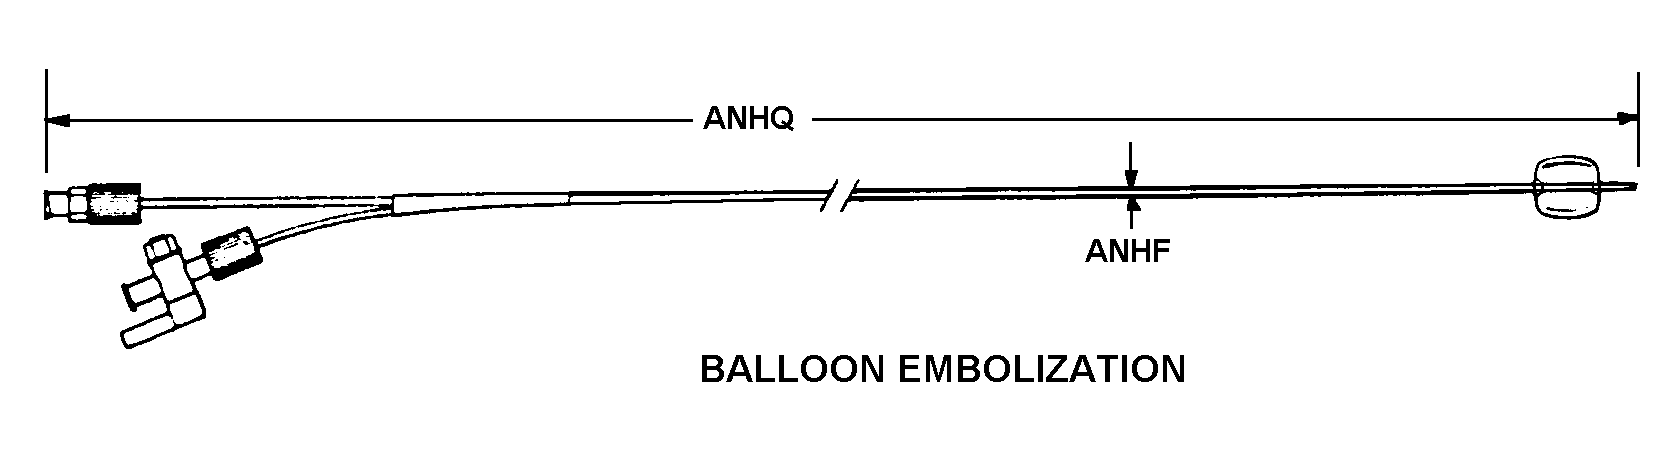 BALLOON EMBOLIZATION style nsn 6515-01-353-5010